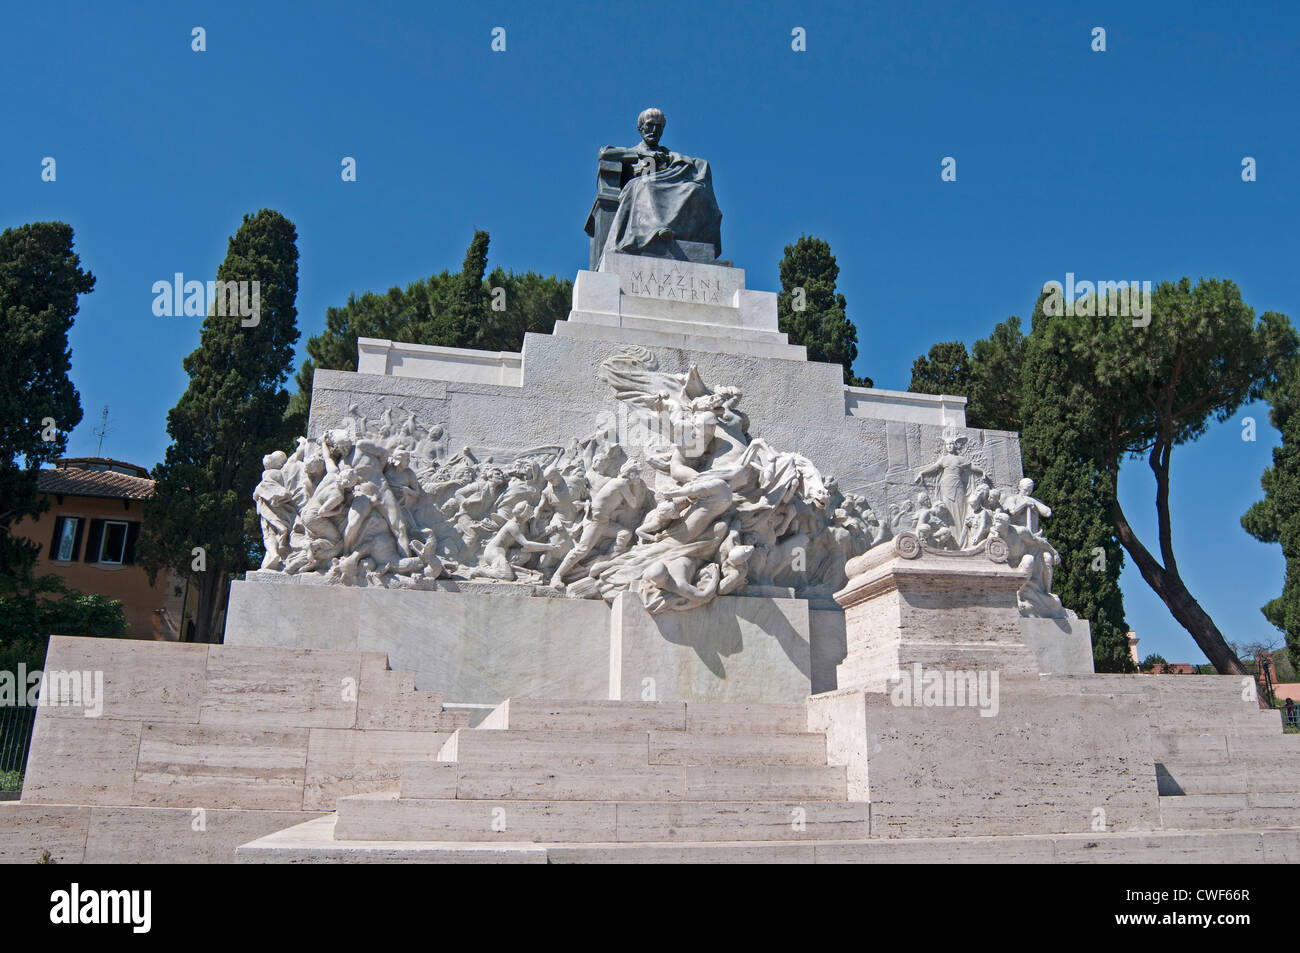 Statue of Giuseppe Mazzini Monument in Piazzale Ugo La Malfa, Rome Italy, Europe Stock Photo